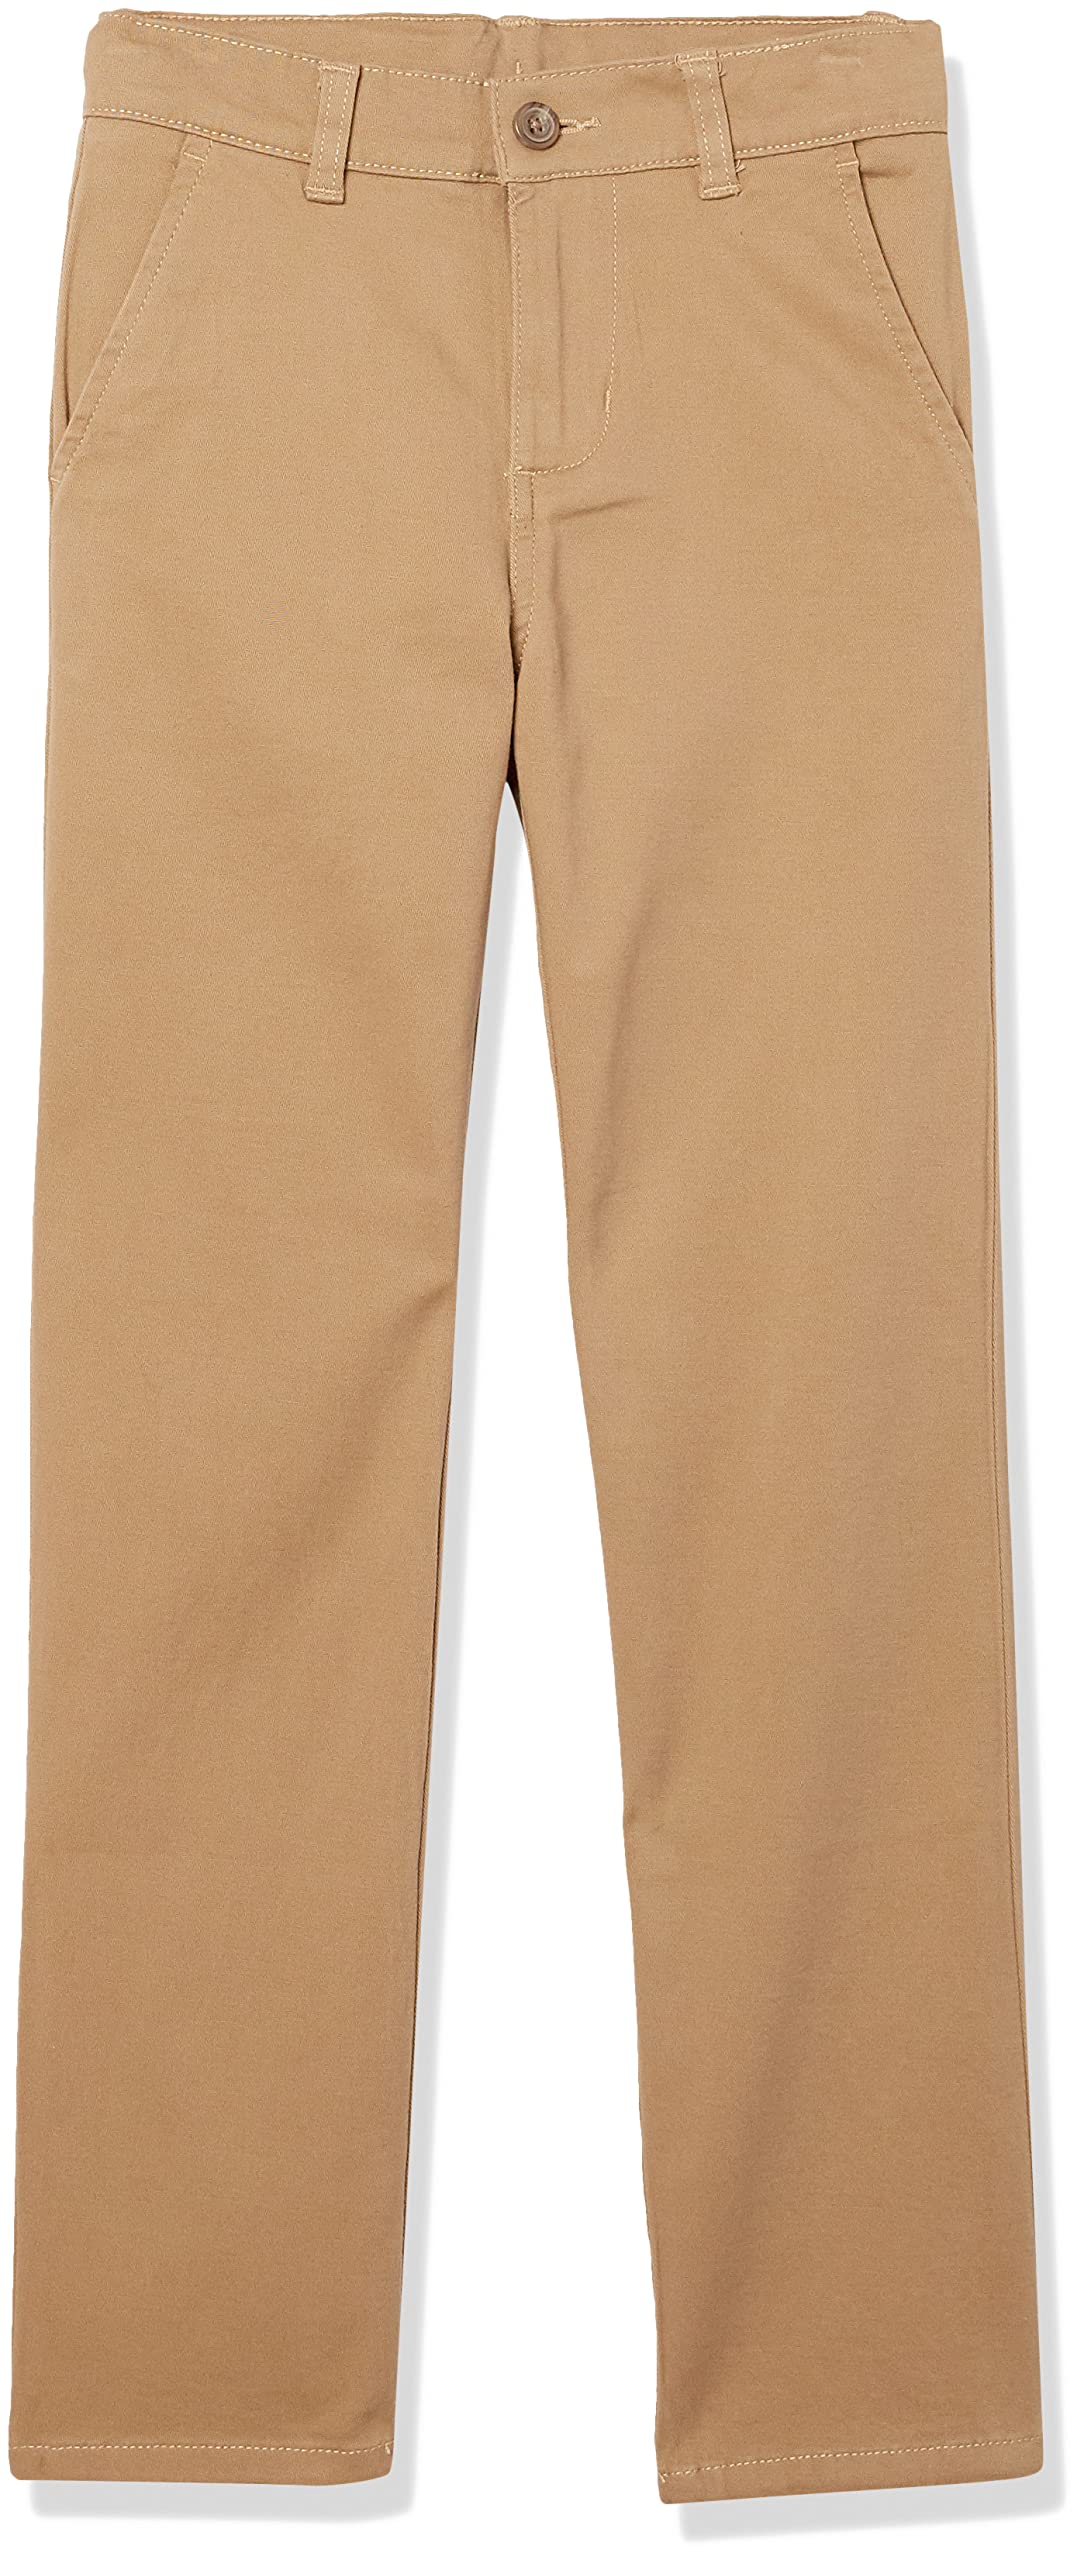 IZOD Boys School Uniform Twill Pants, Flat Front  comfortable Waistband, Burnished Khaki, 10 Slim